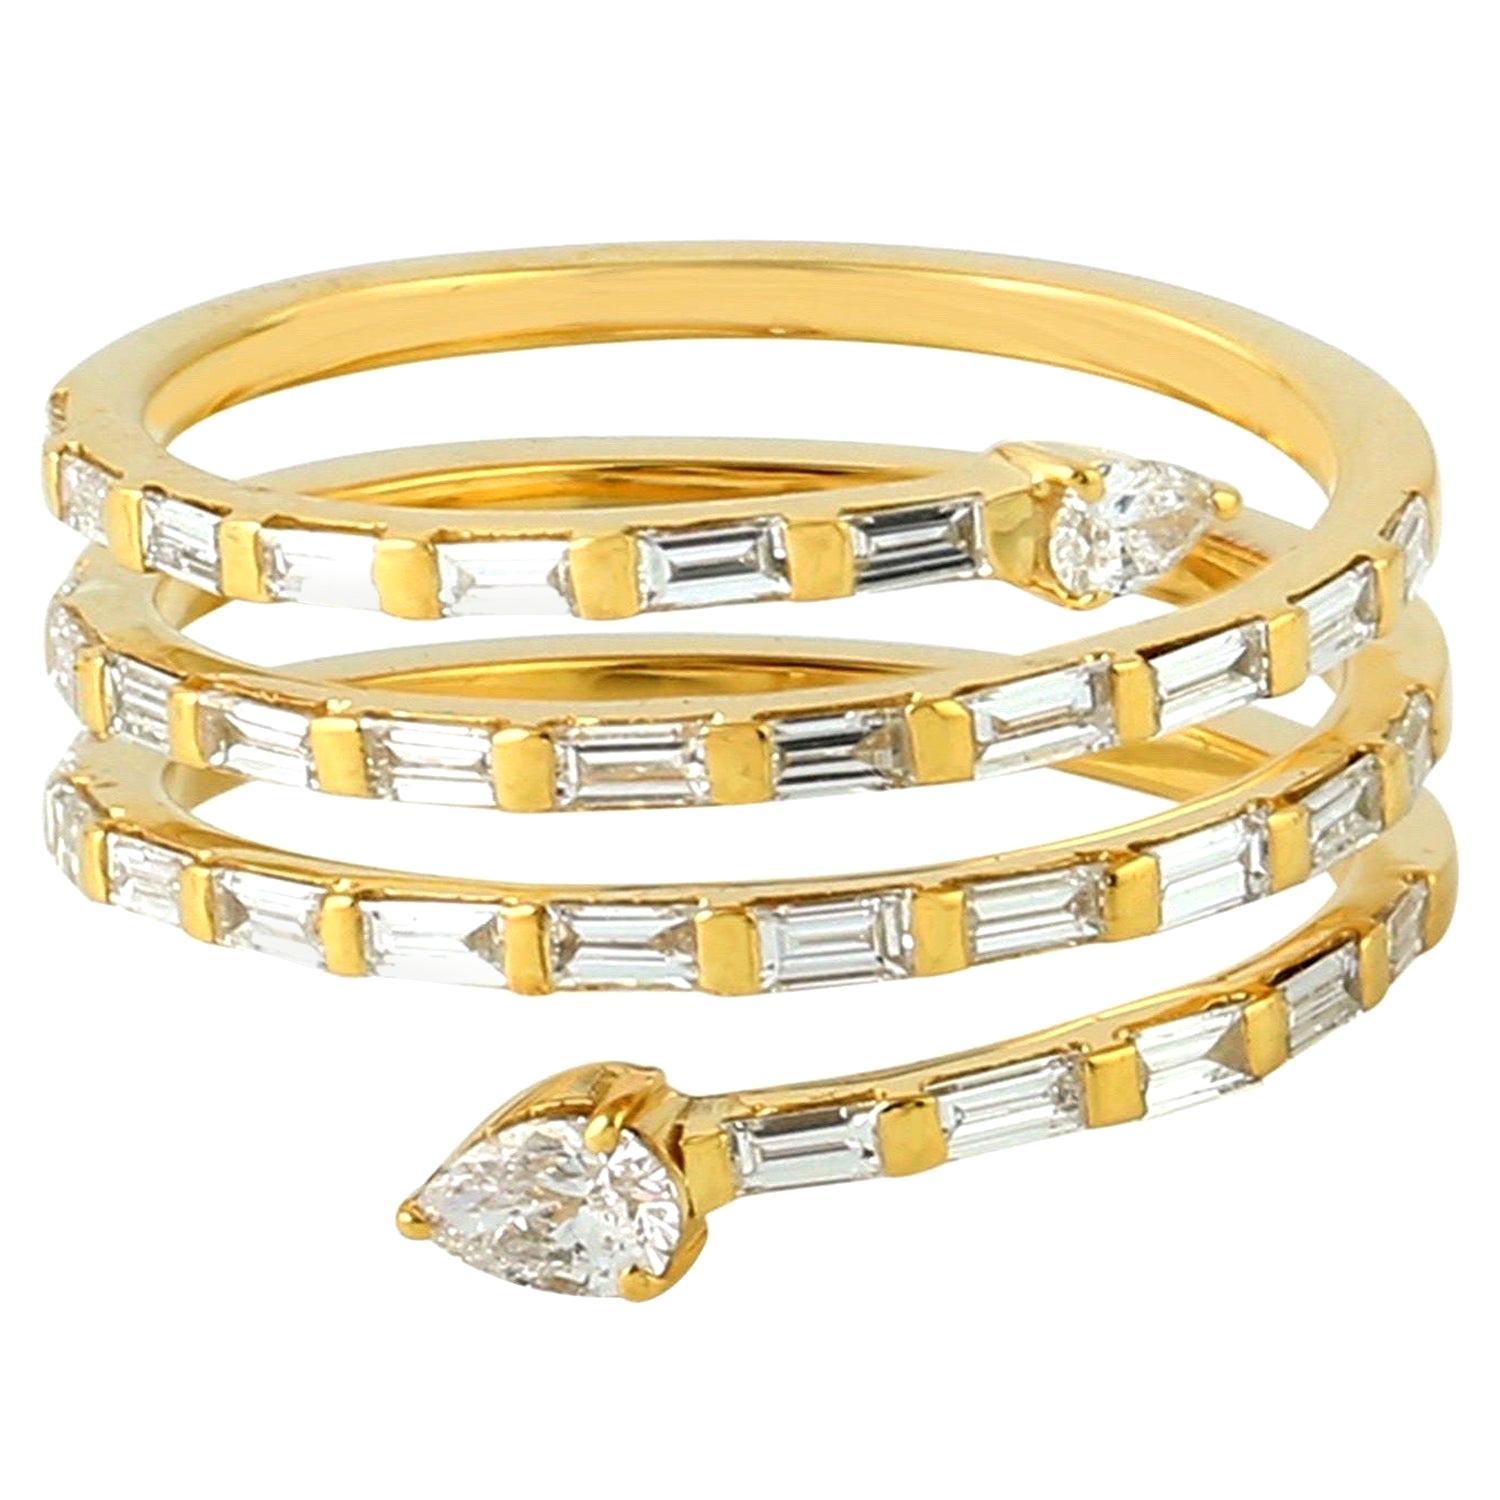 Bague en spirale en or jaune 18 carats avec diamants